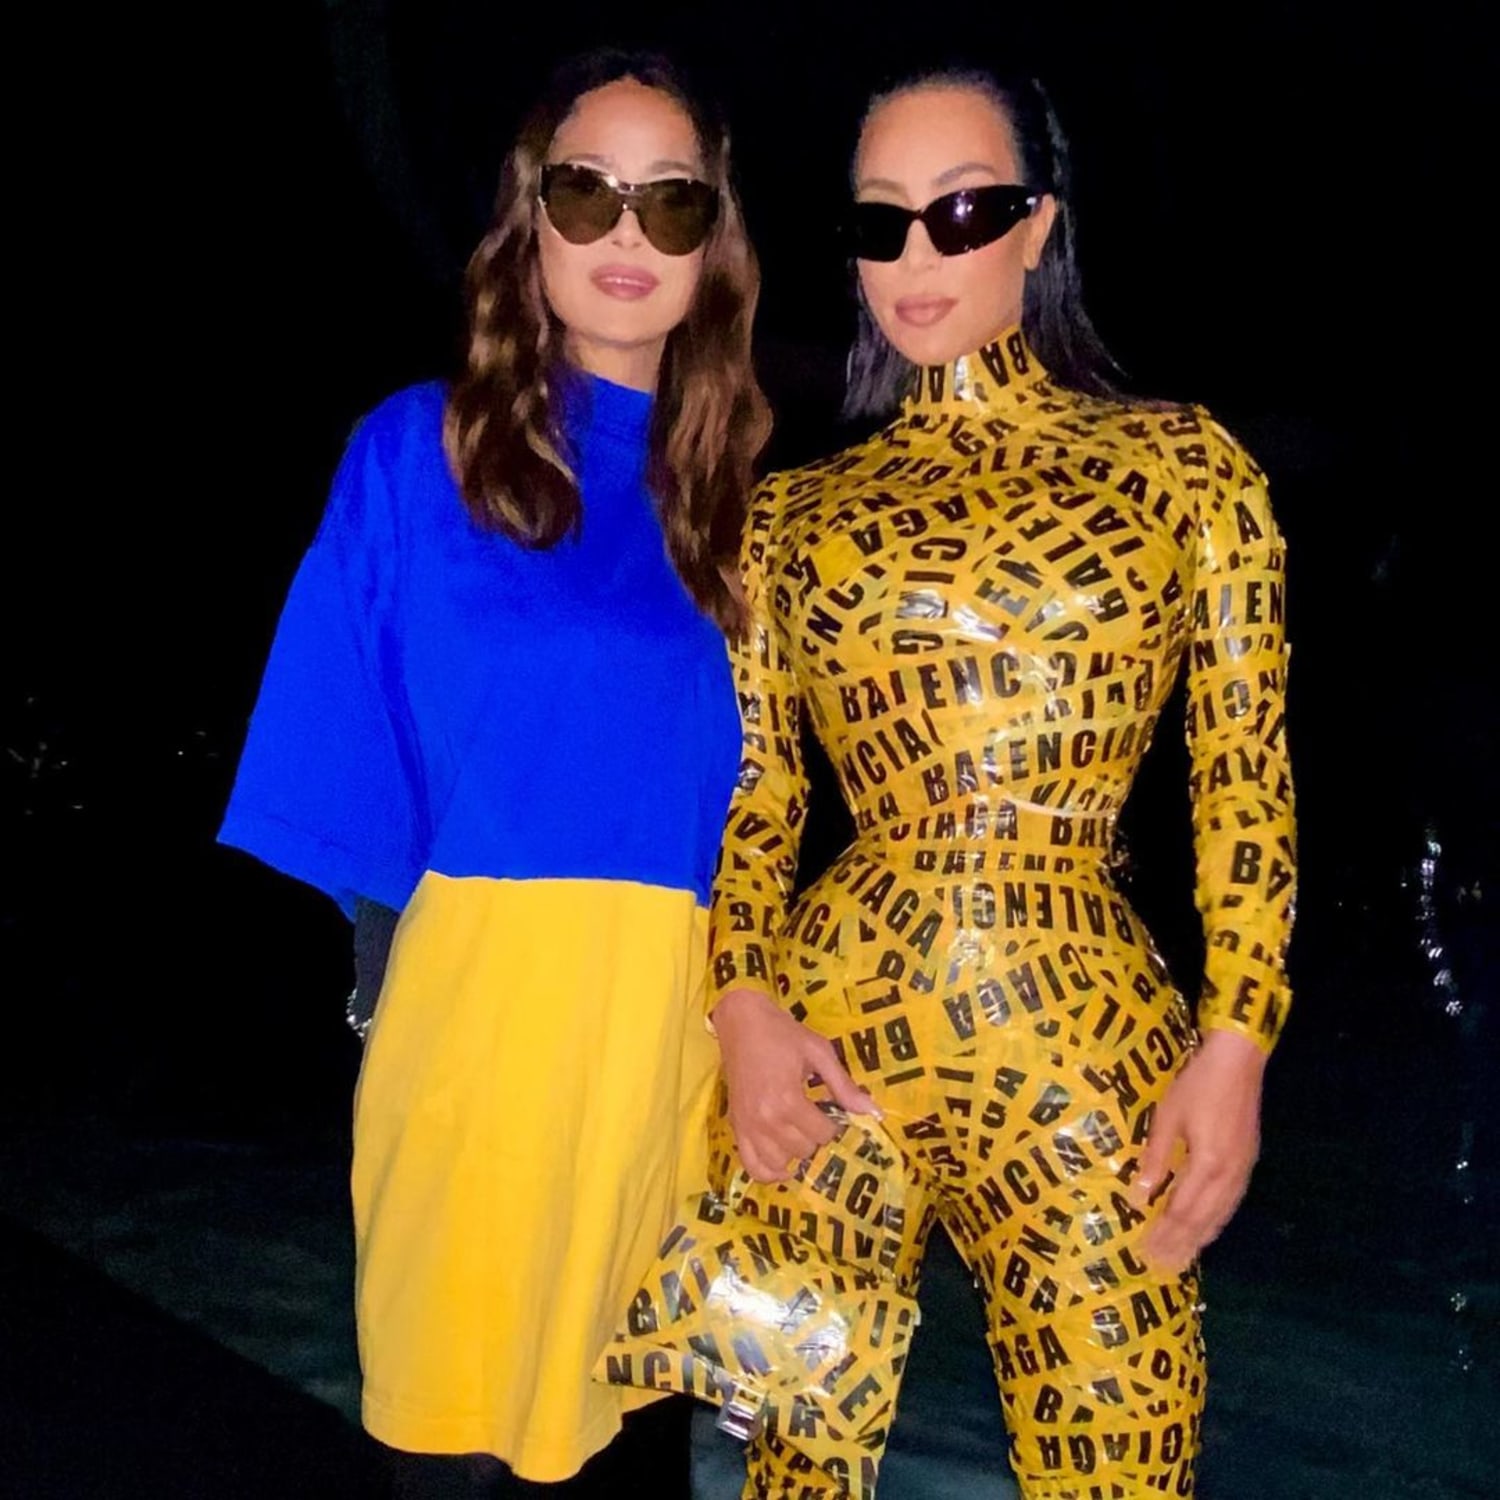 Kim Kardashian Covers Herself in Yellow Caution Tape for Balenciaga